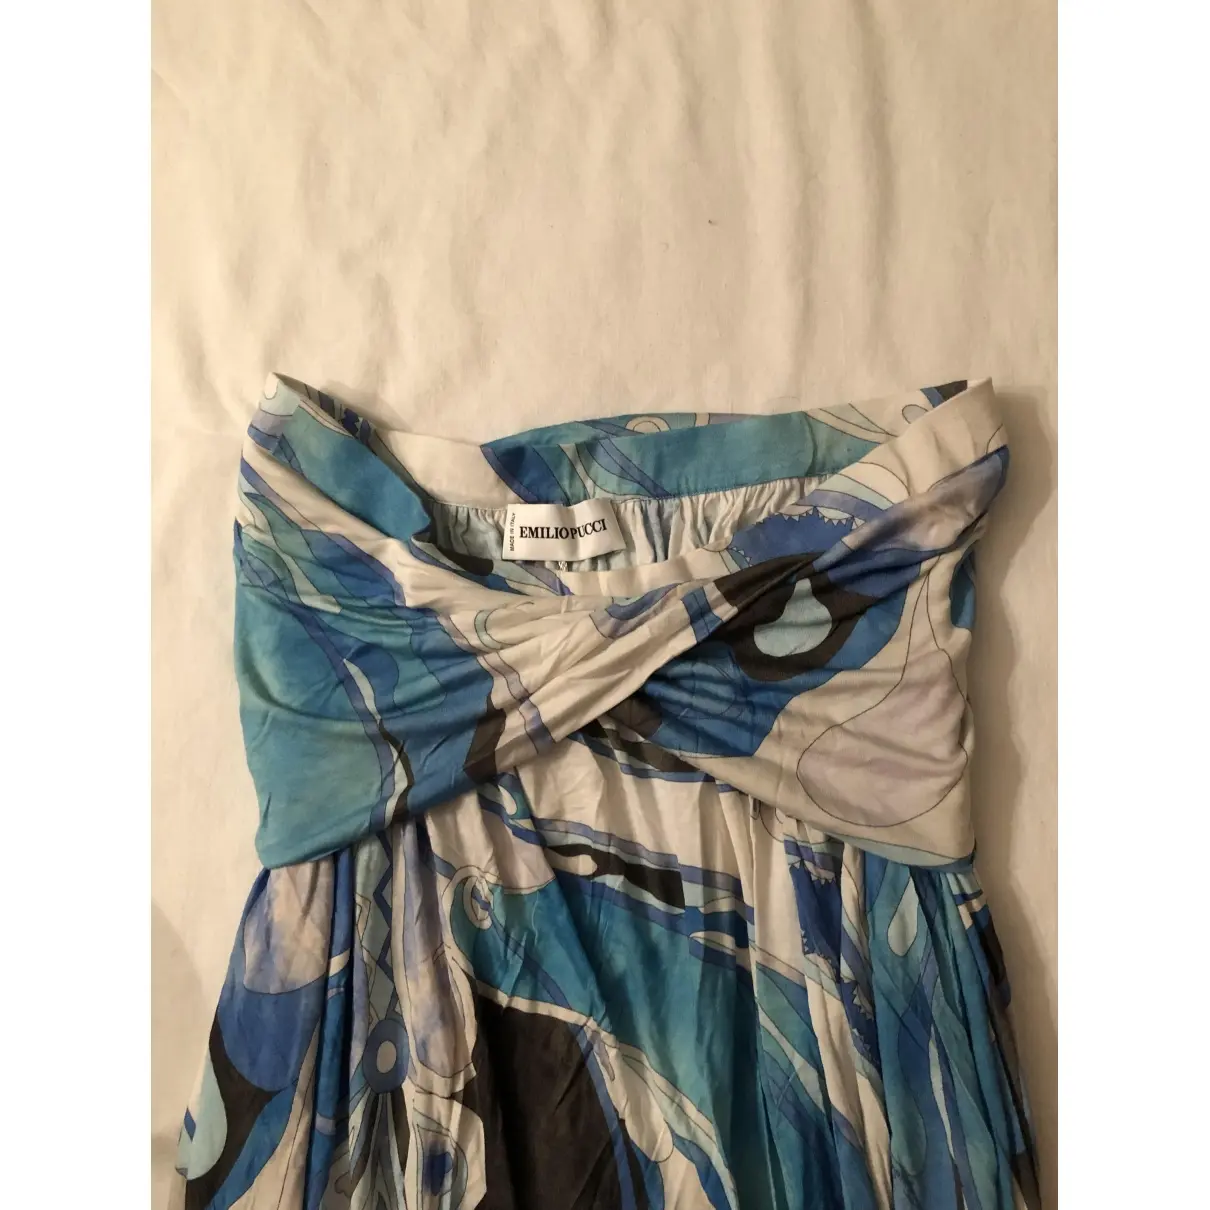 Emilio Pucci Maxi dress for sale